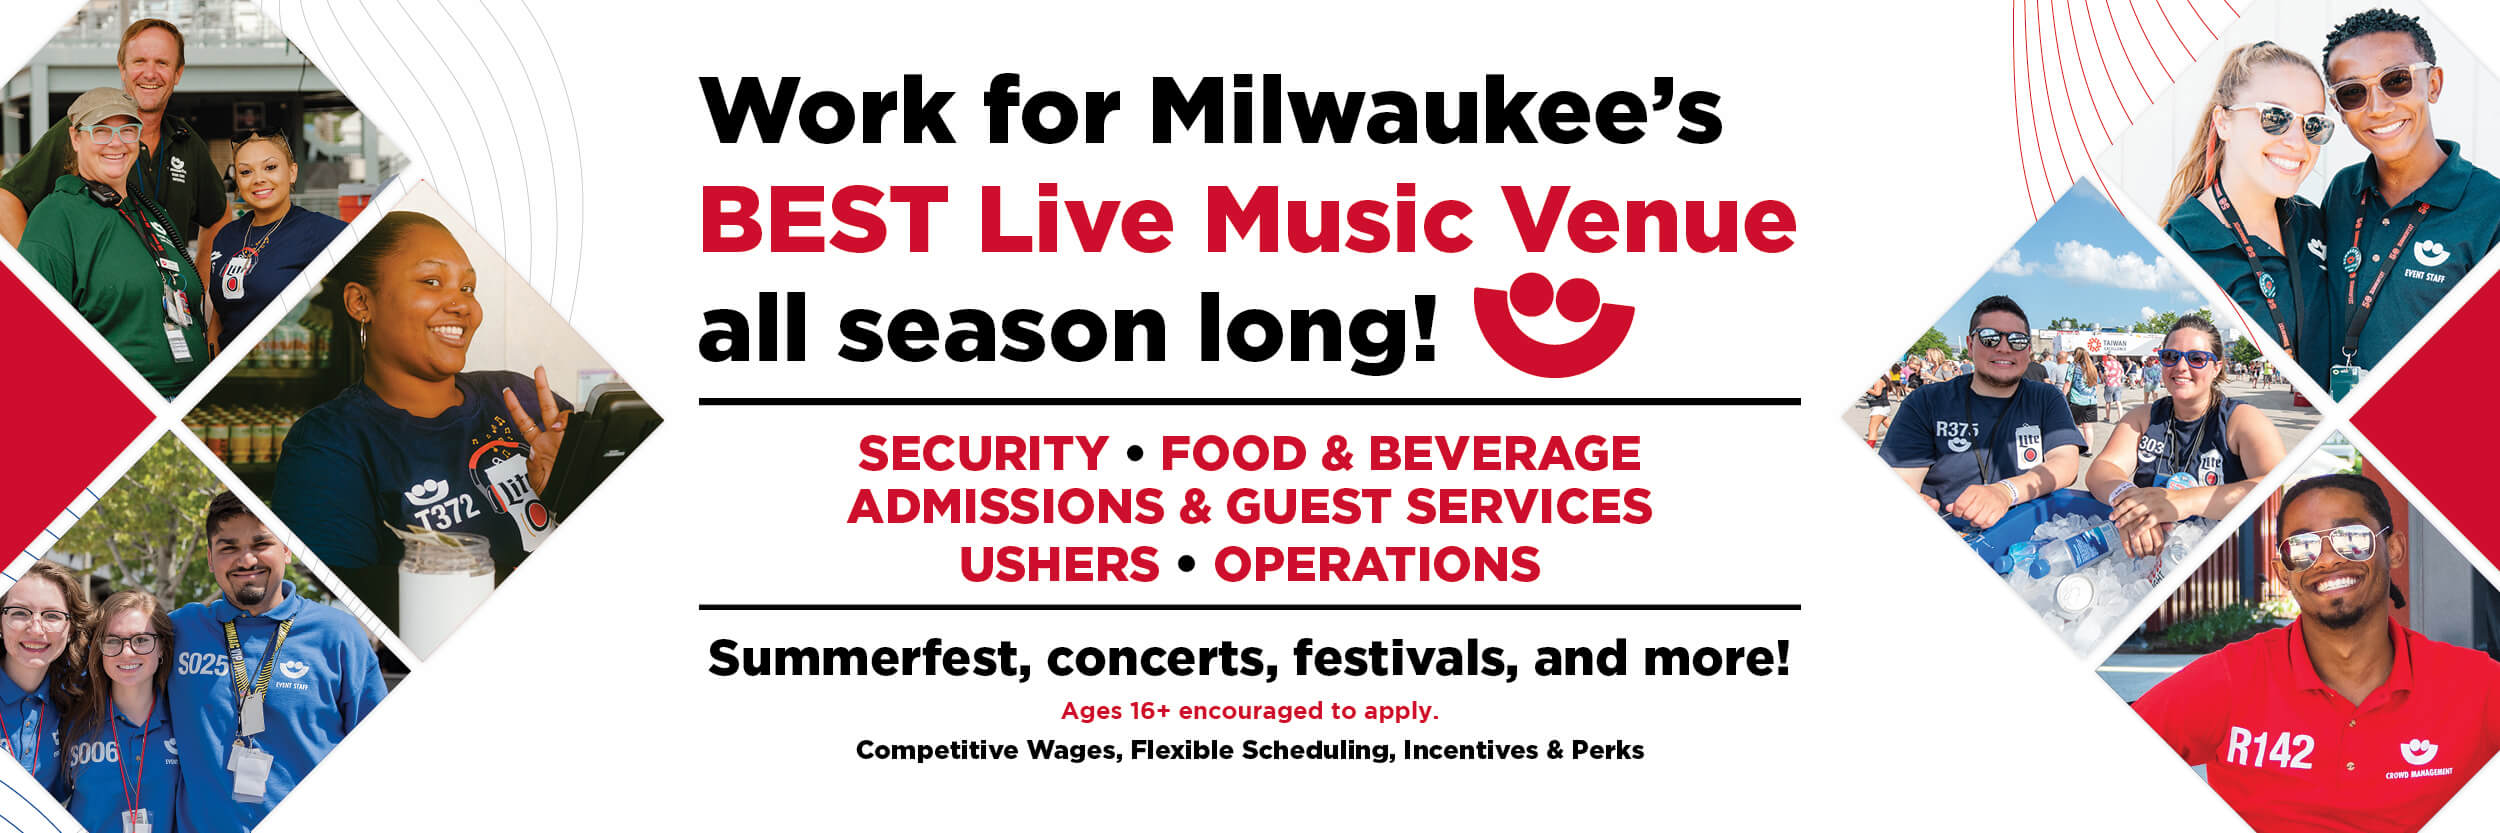 Milwaukee World Festival is hiring thousands for the summer festival season